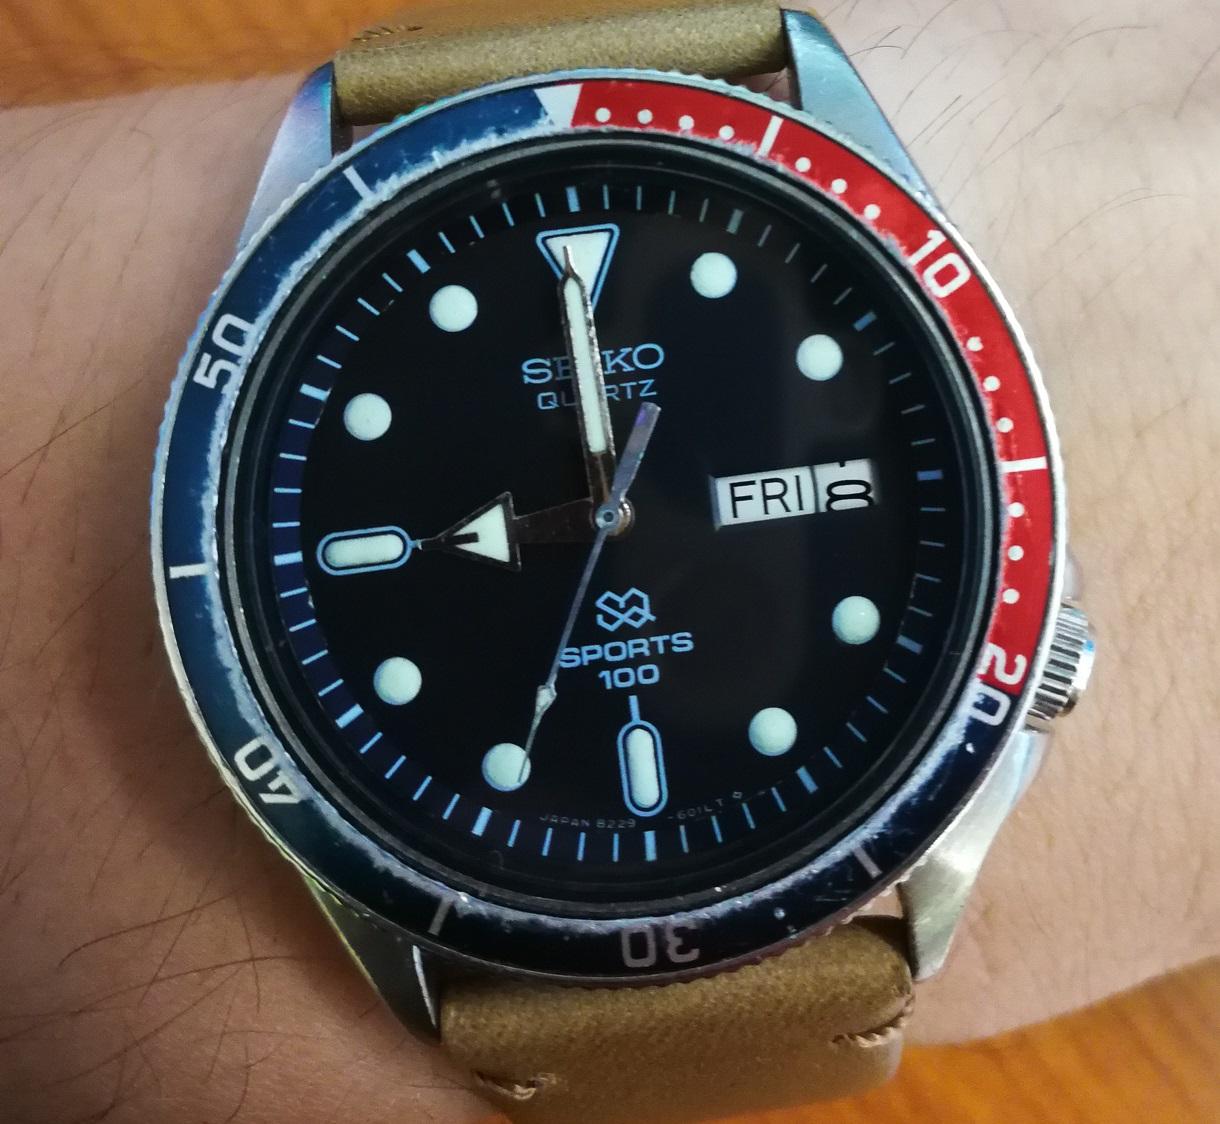 Seiko 8229 date mis-aligned - Watch Repairs Help & Advice - Watch ...